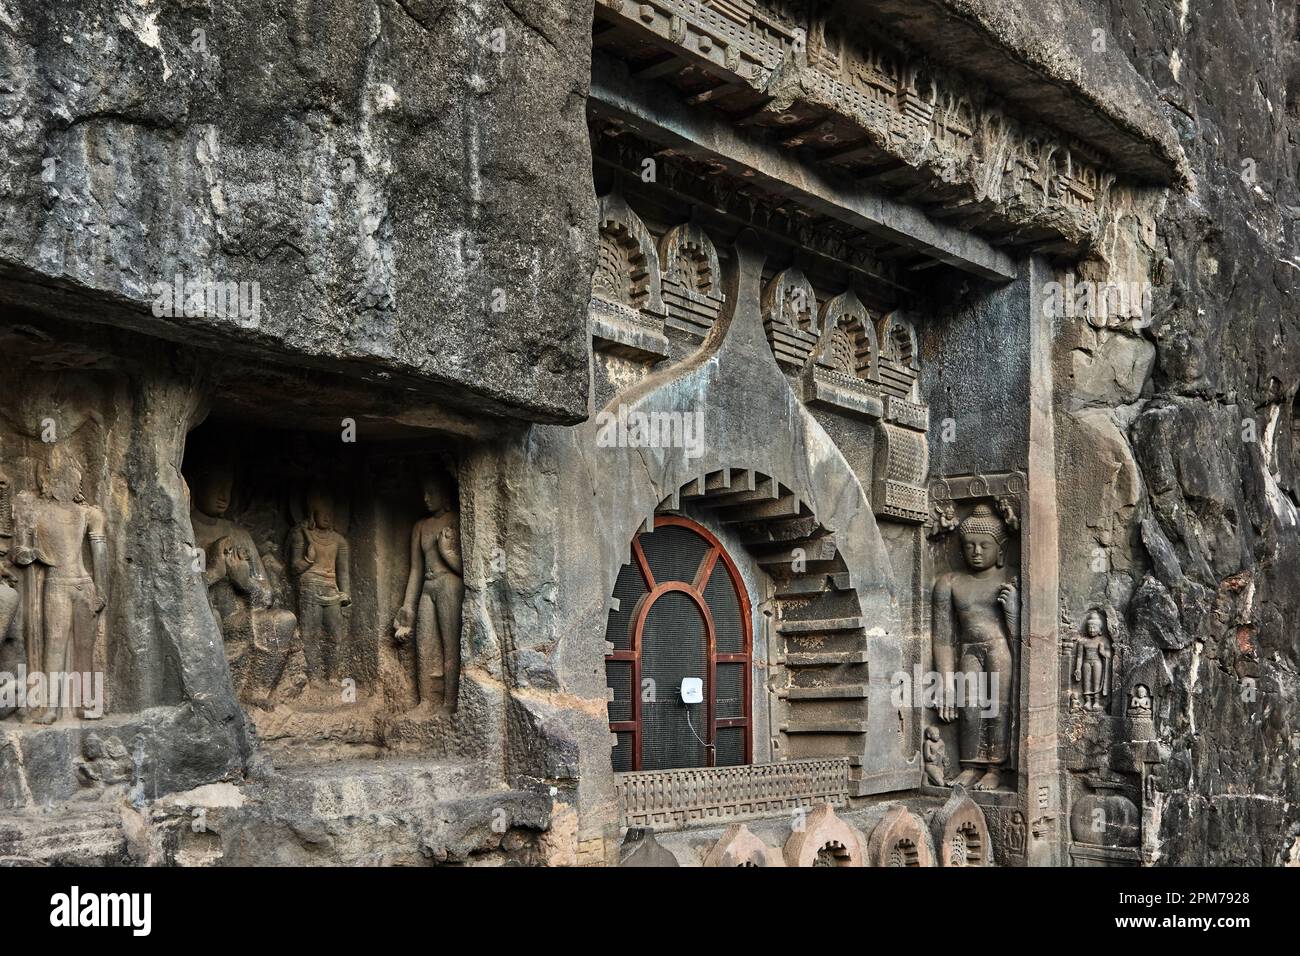 Le grotte Ajanta pareti esterne pietra figure tagliate e porte India. Foto Stock